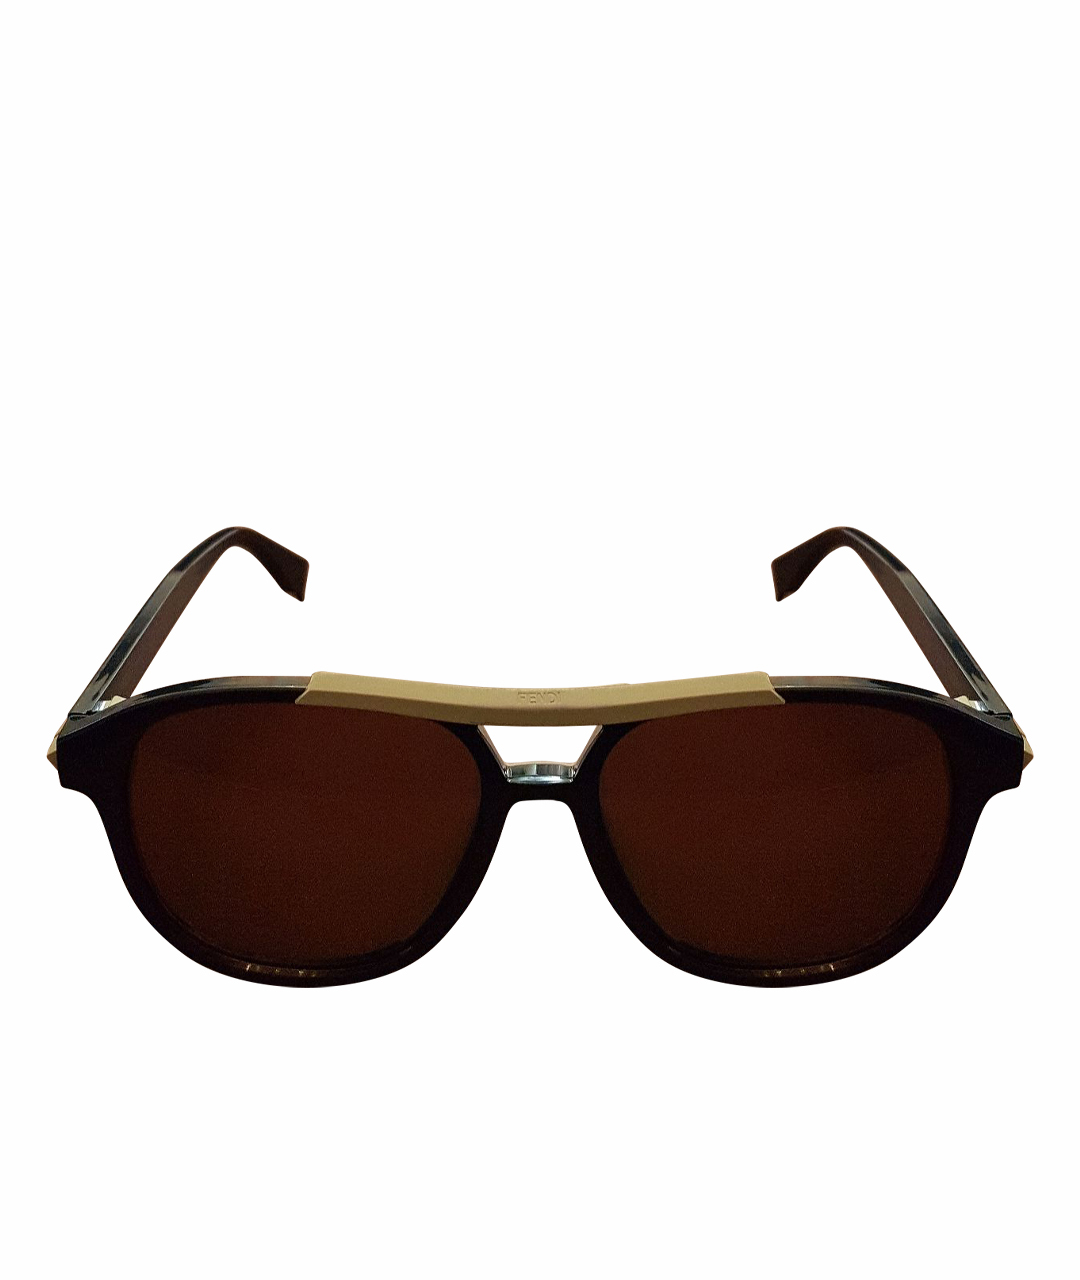 FENDI Темно-синие пластиковые солнцезащитные очки, фото 1